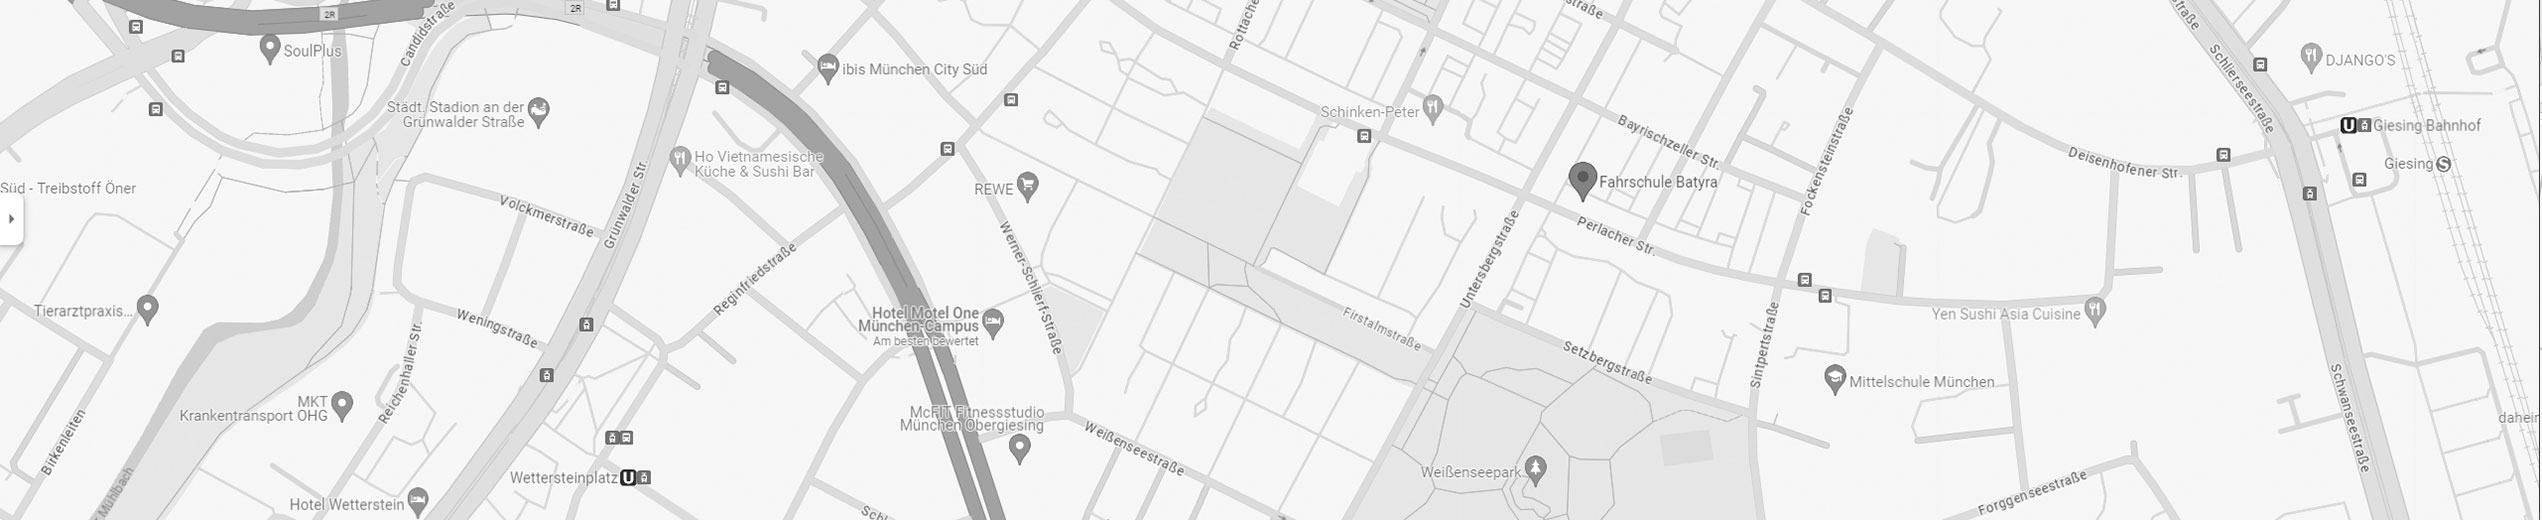 Fahrschule Batyra in München Google Map